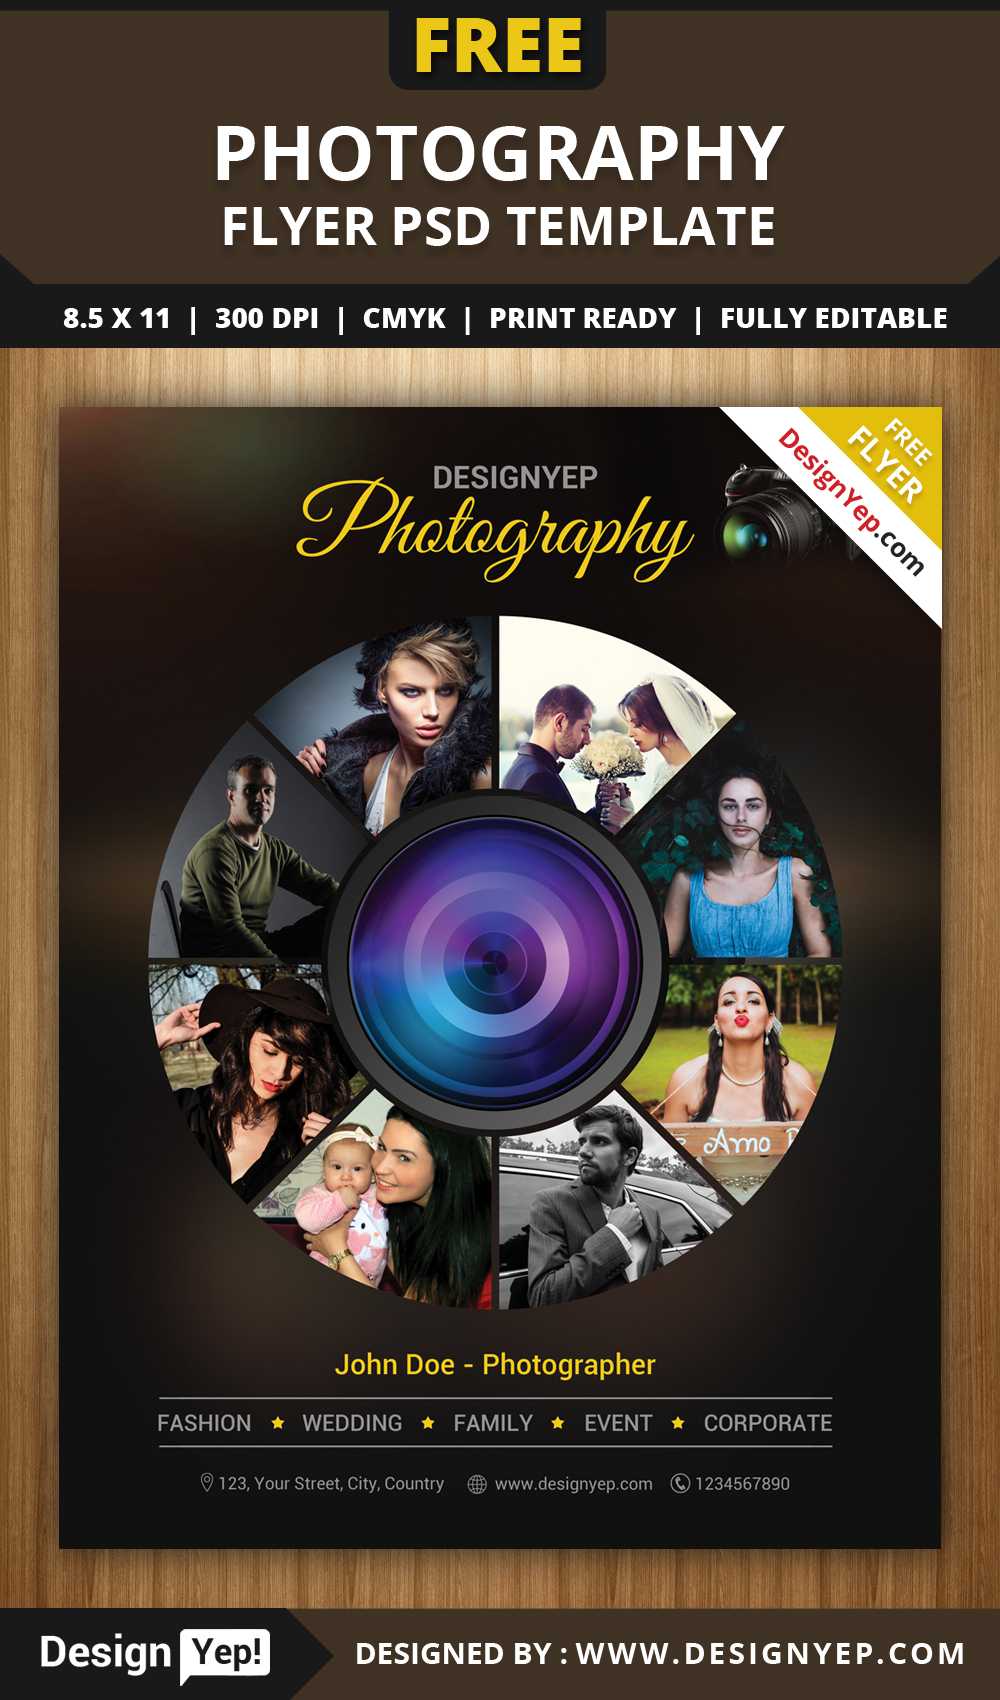 Free Photography Flyer Psd Template – Designyep Intended For Free Photography Flyer Templates Psd